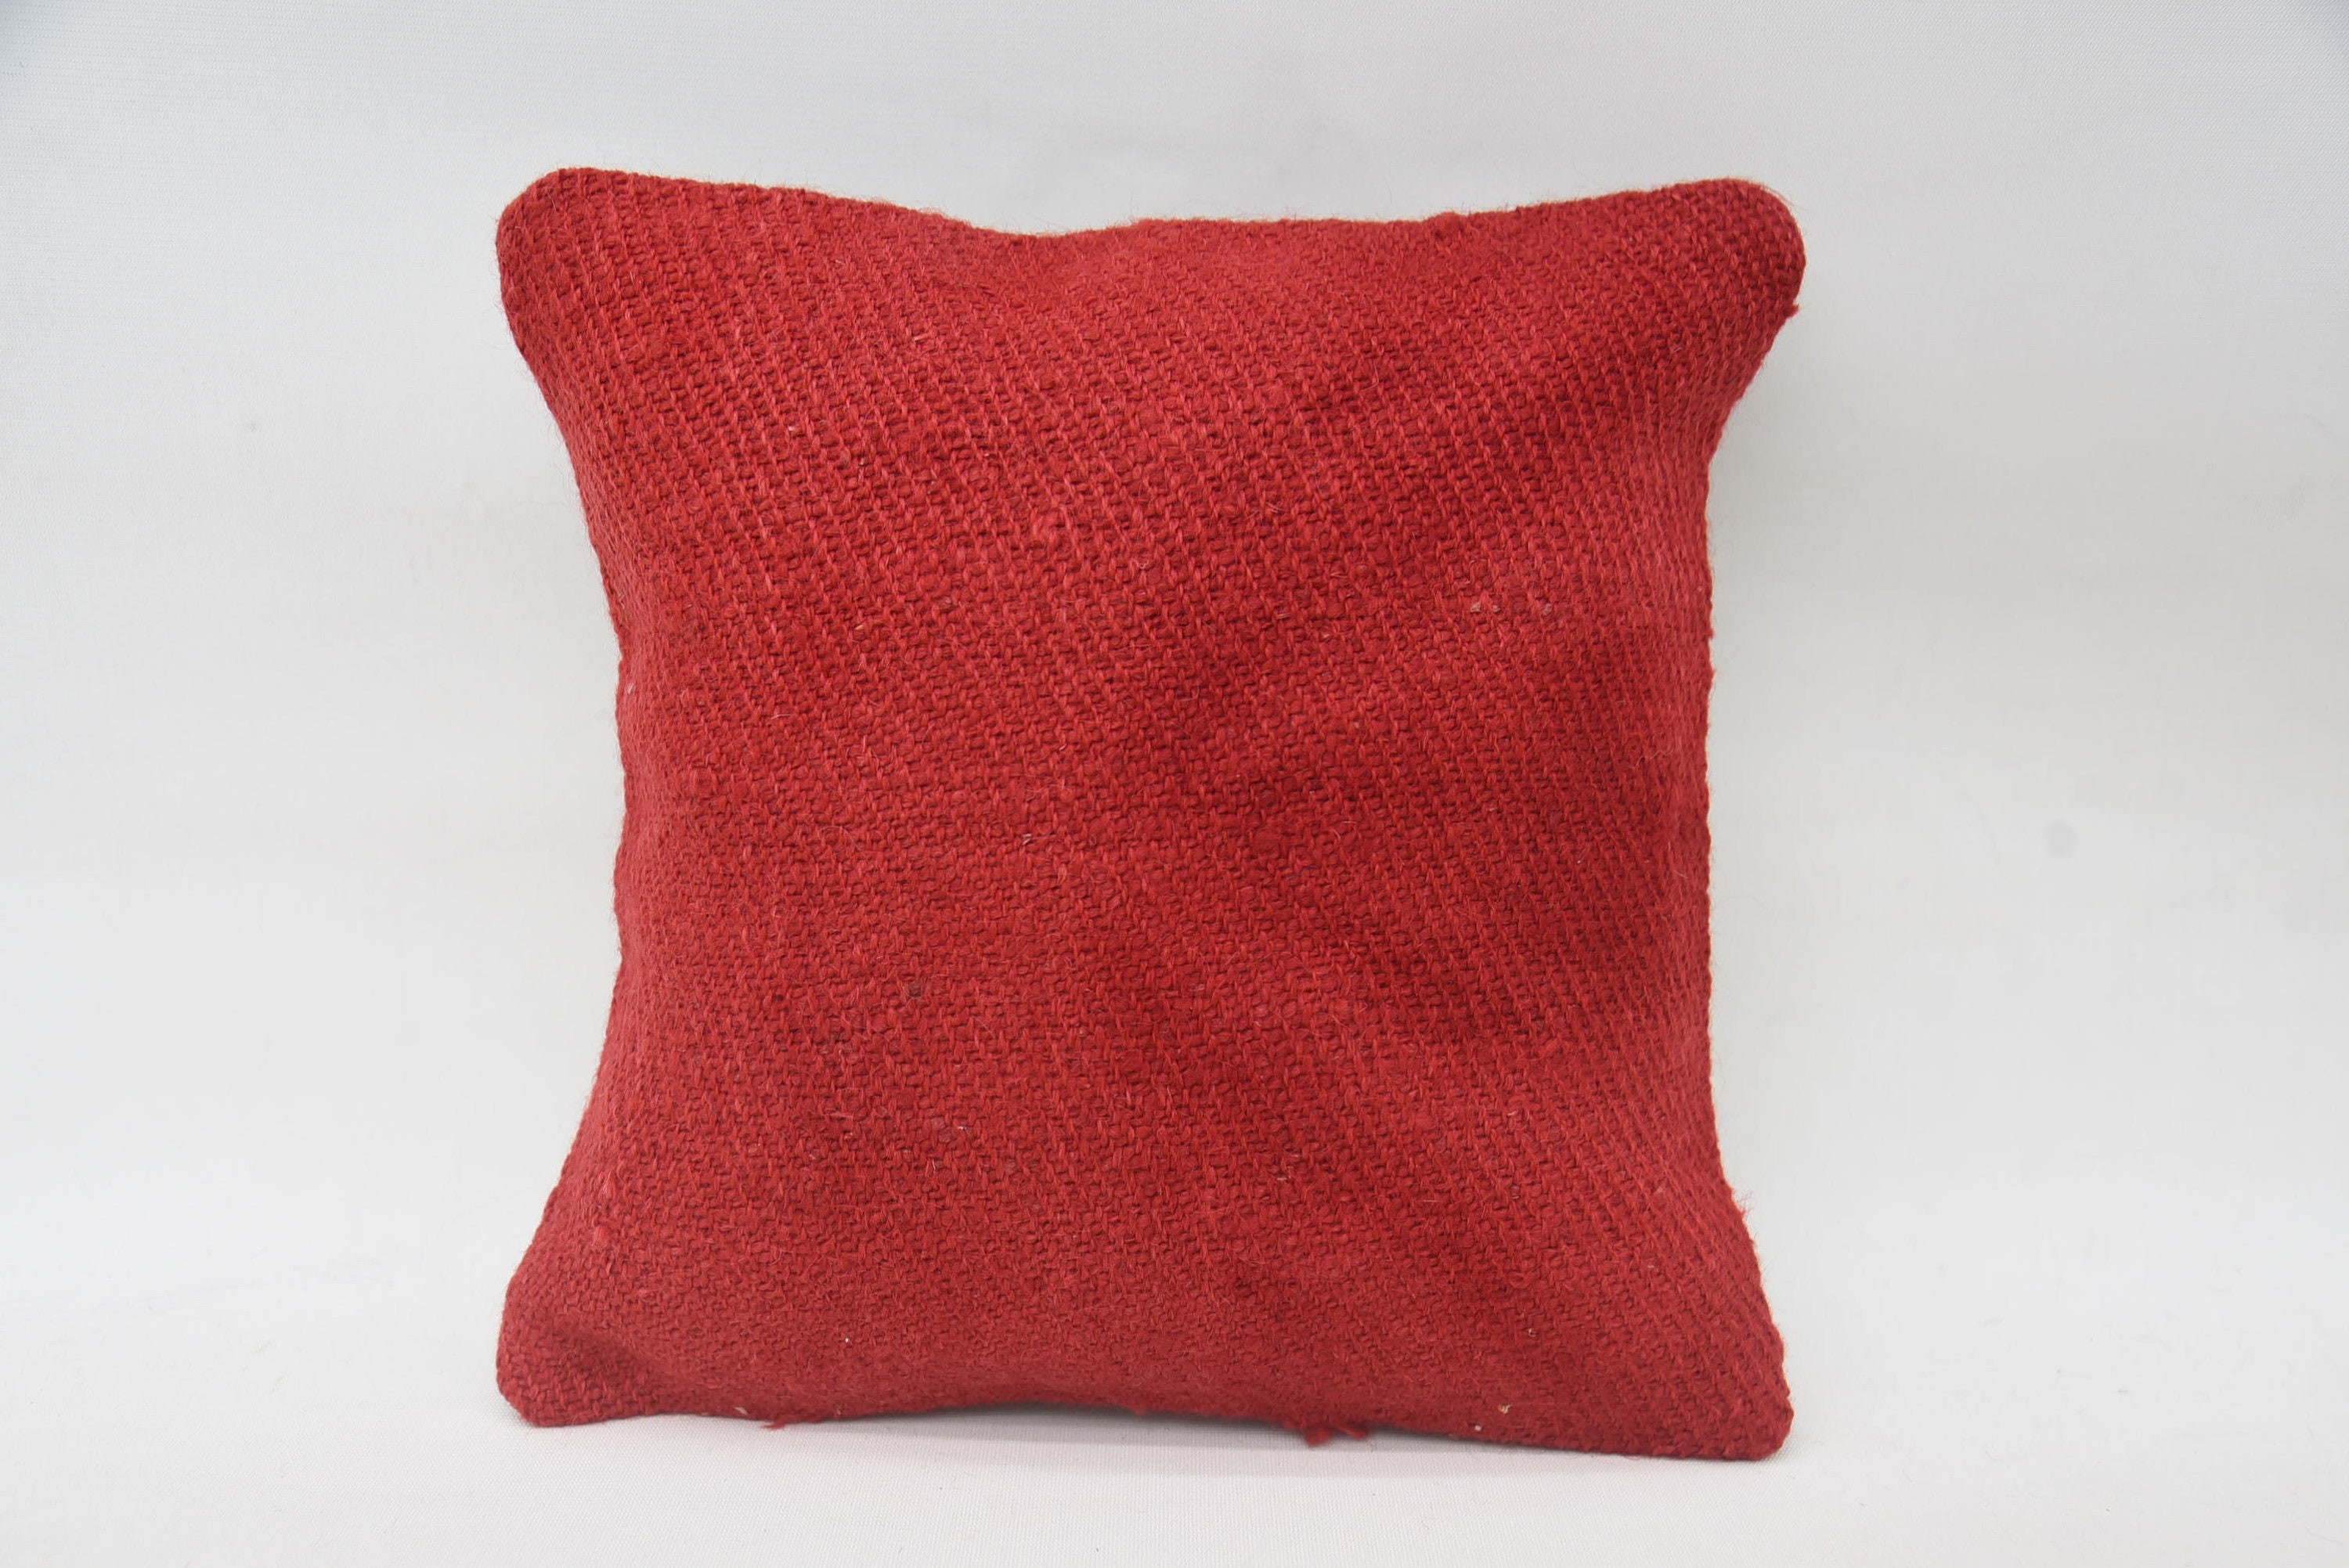 Interior Designer Pillow, Pet Cushion Cover, 12"x12" Red Pillow Cover, Gift Pillow, Accent Throw Cushion Case, Vintage Kilim Throw Pillow